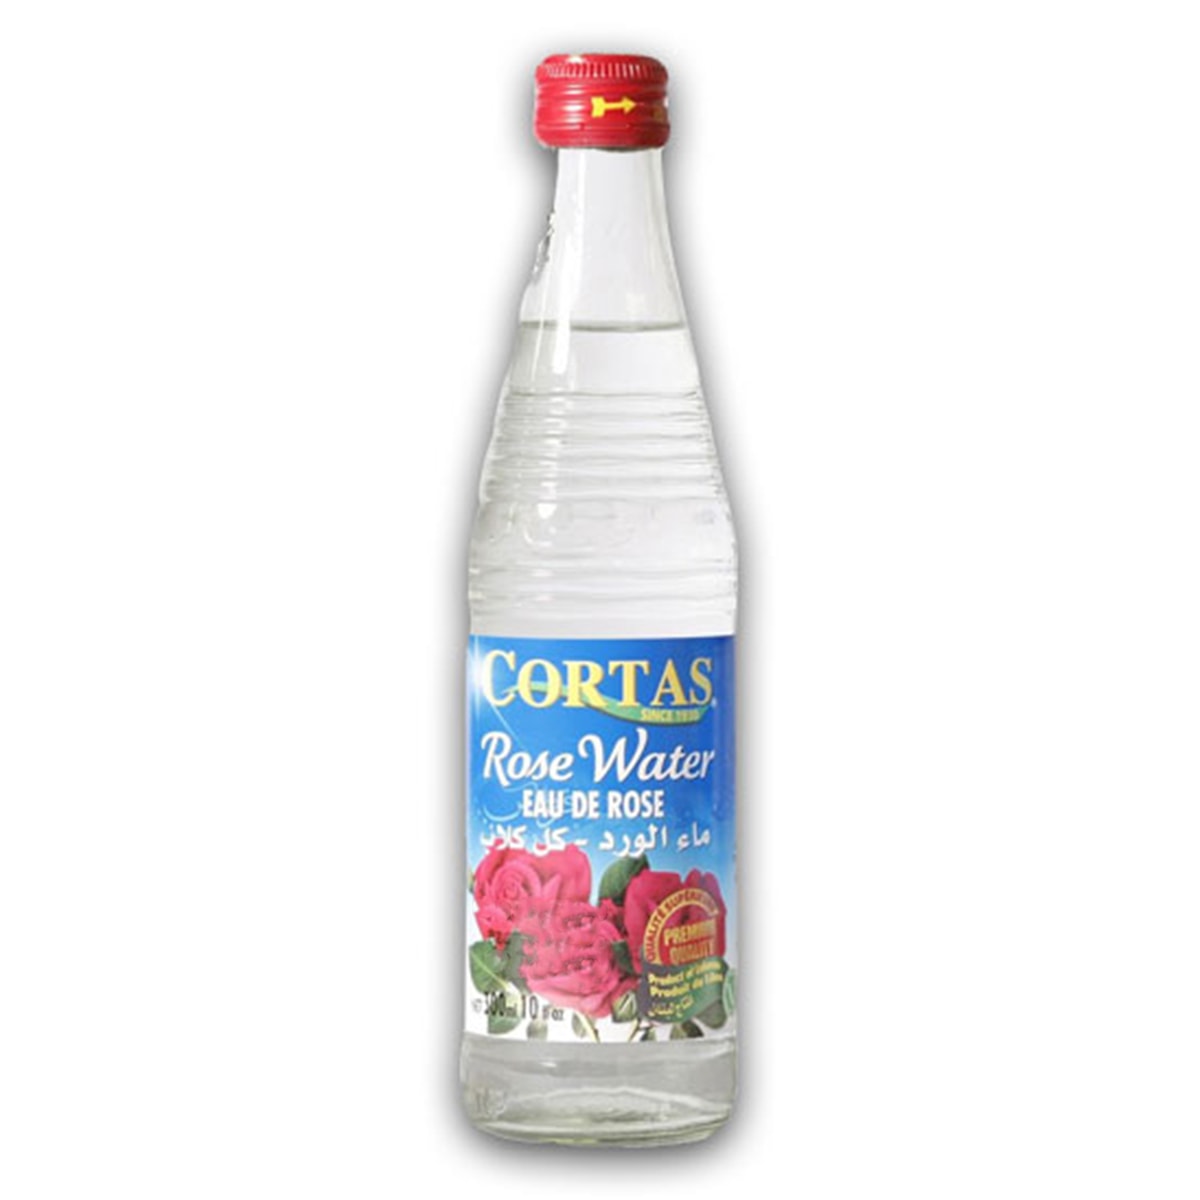 Buy Cortas Rose Water - 300 ml